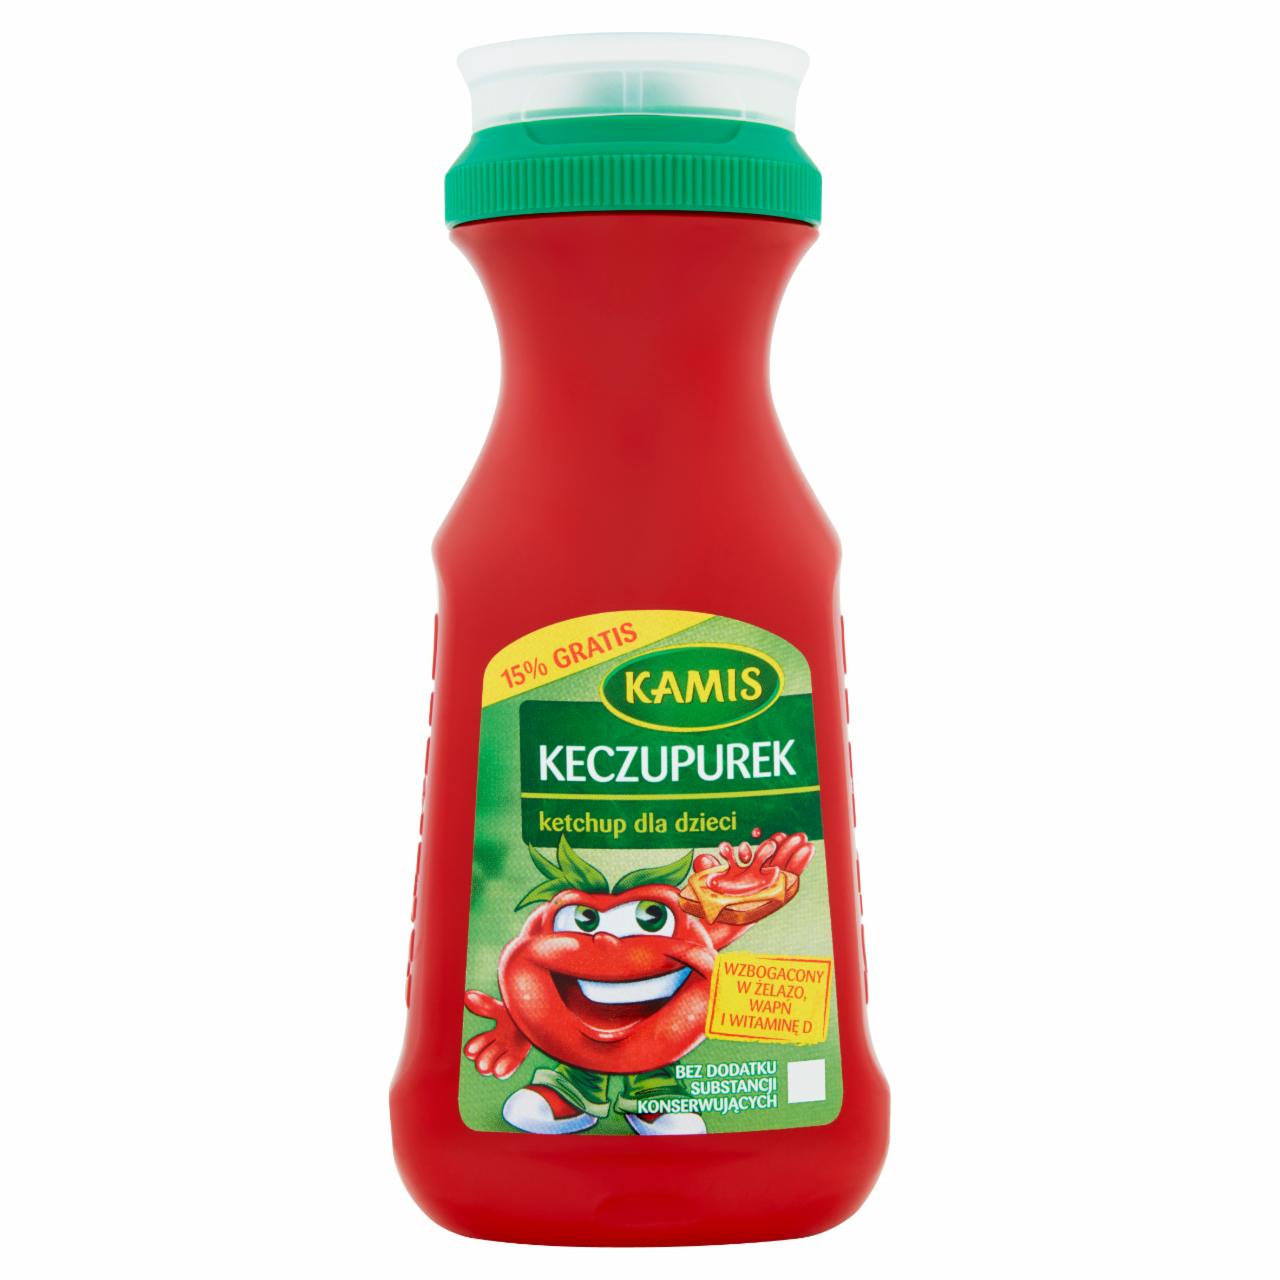 Zdjęcia - Kamis Keczupurek Ketchup dla dzieci 350 g